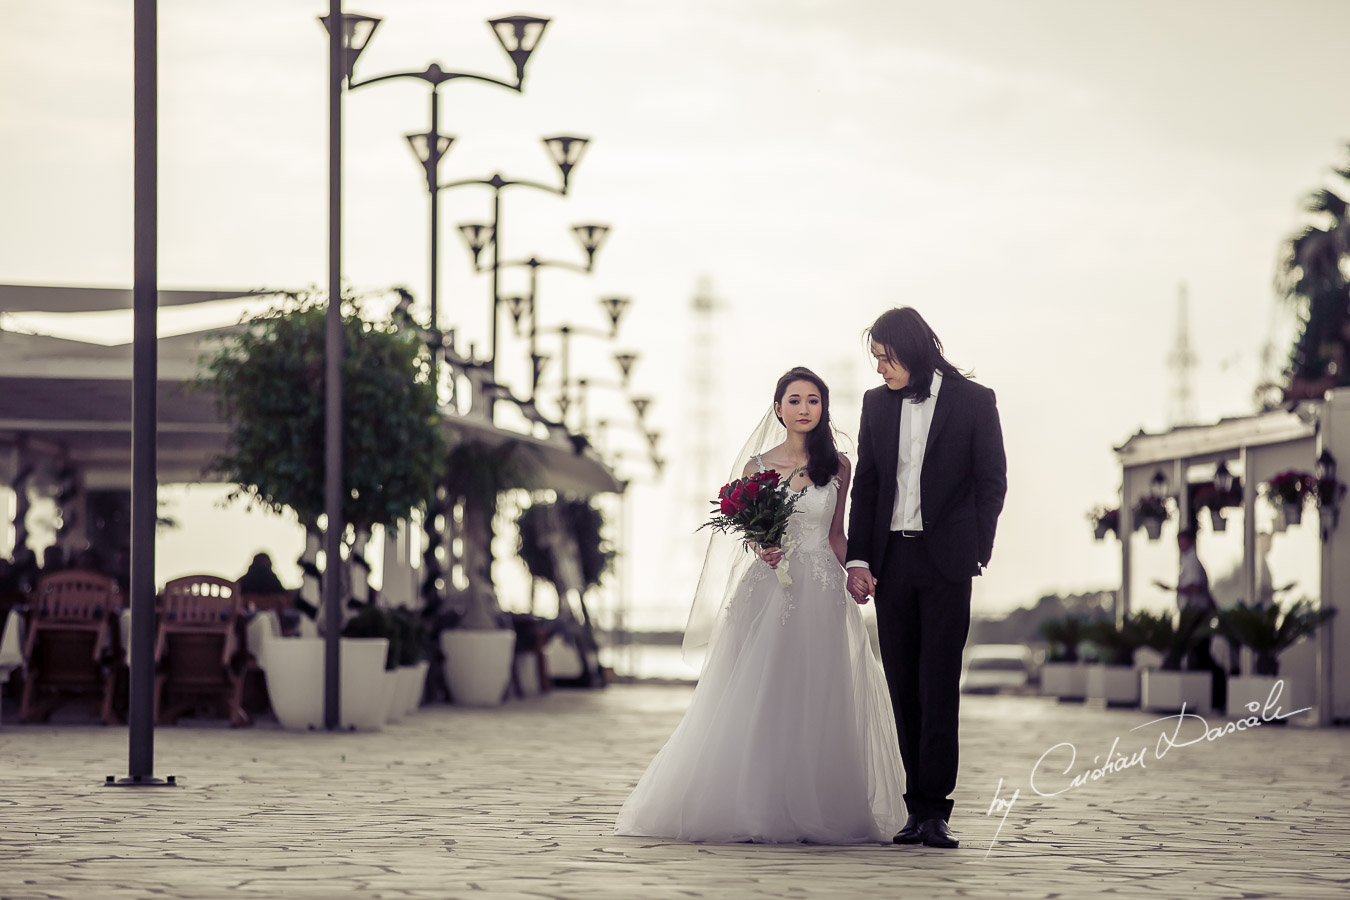 Pre Wedding Photoshoot in Cyprus - 03